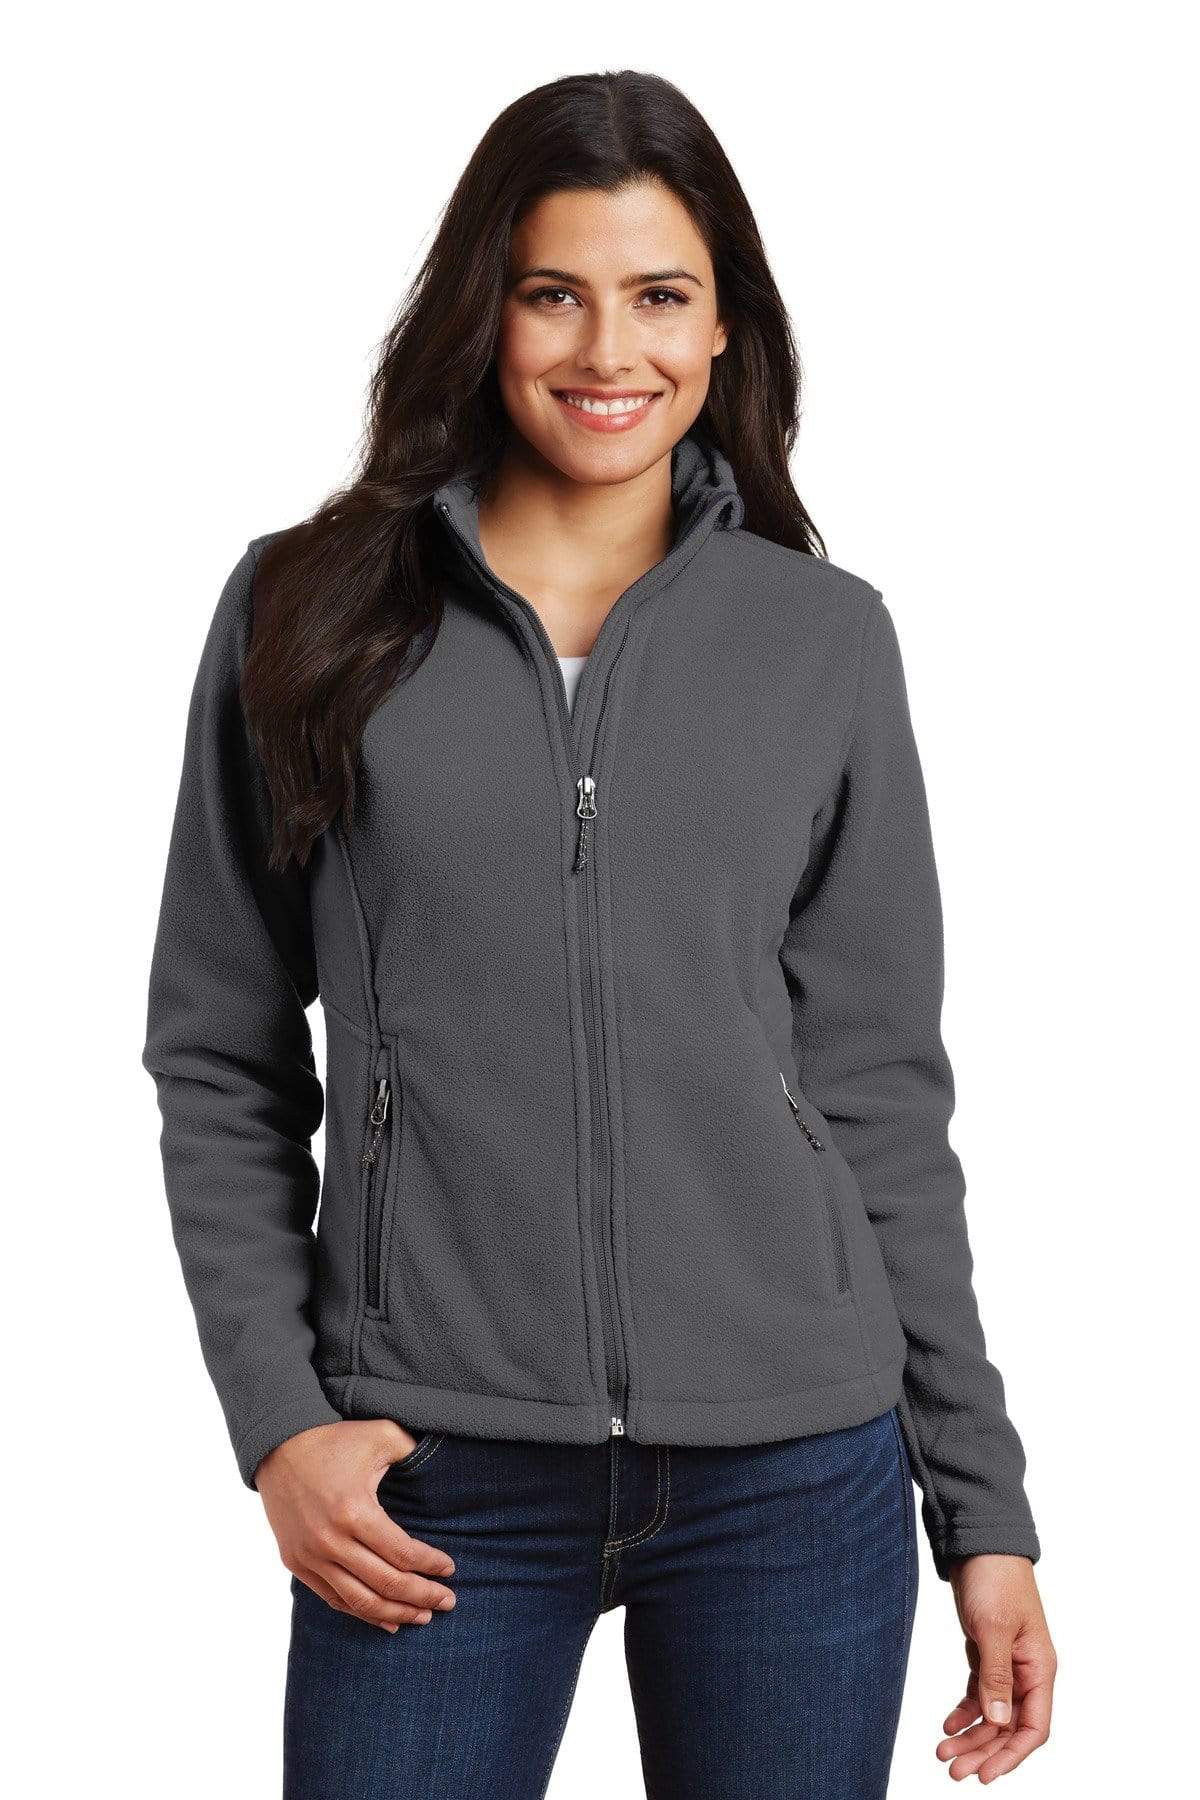 Port Authority Jackets For Women - Fleece Jacket L2179981